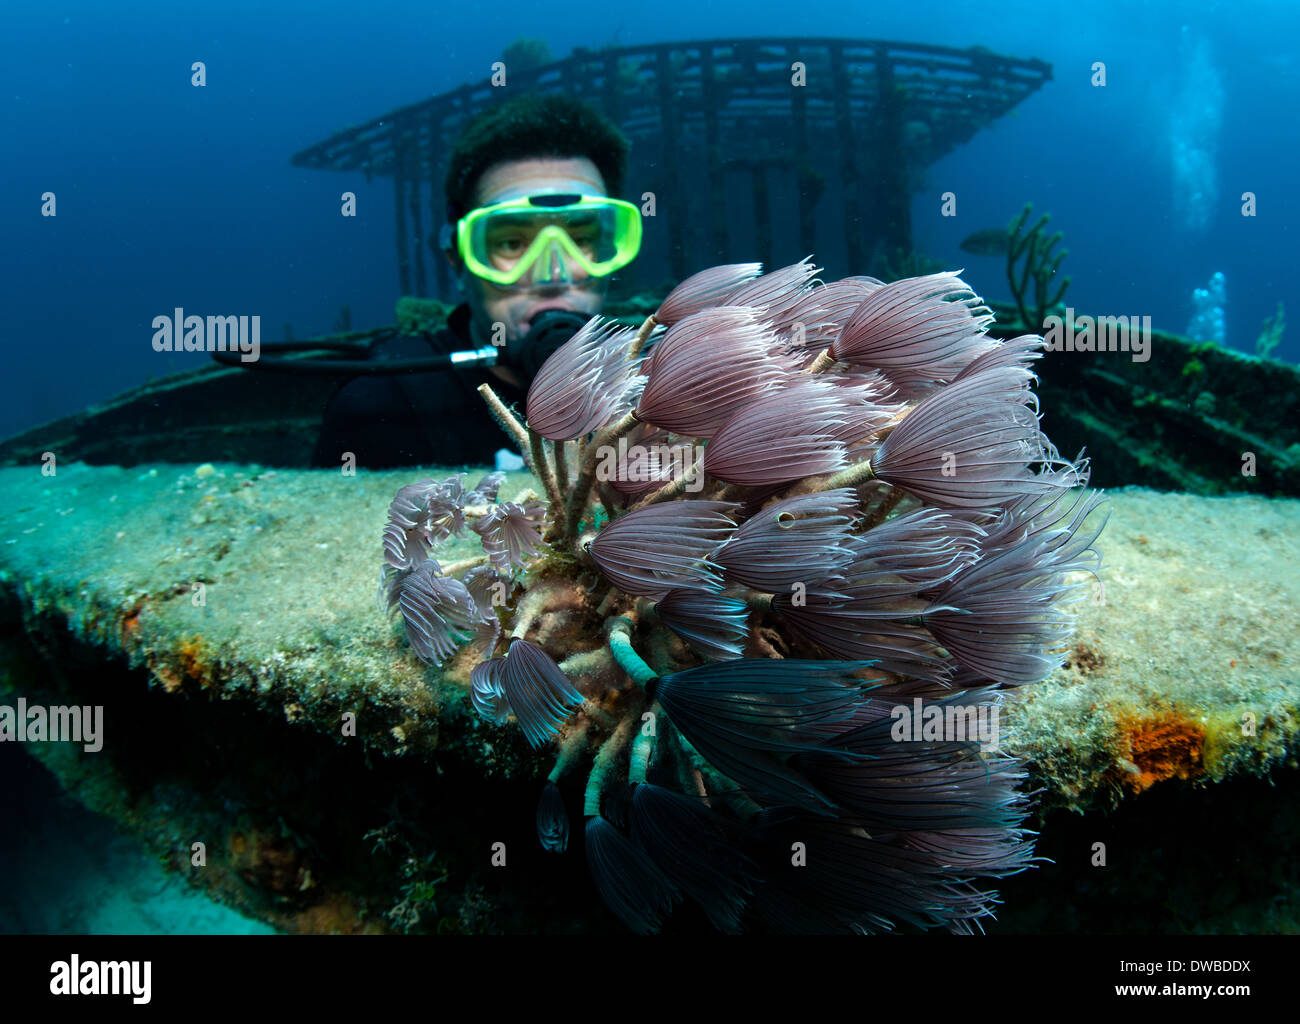 Diver views marine life on wreck. Stock Photo